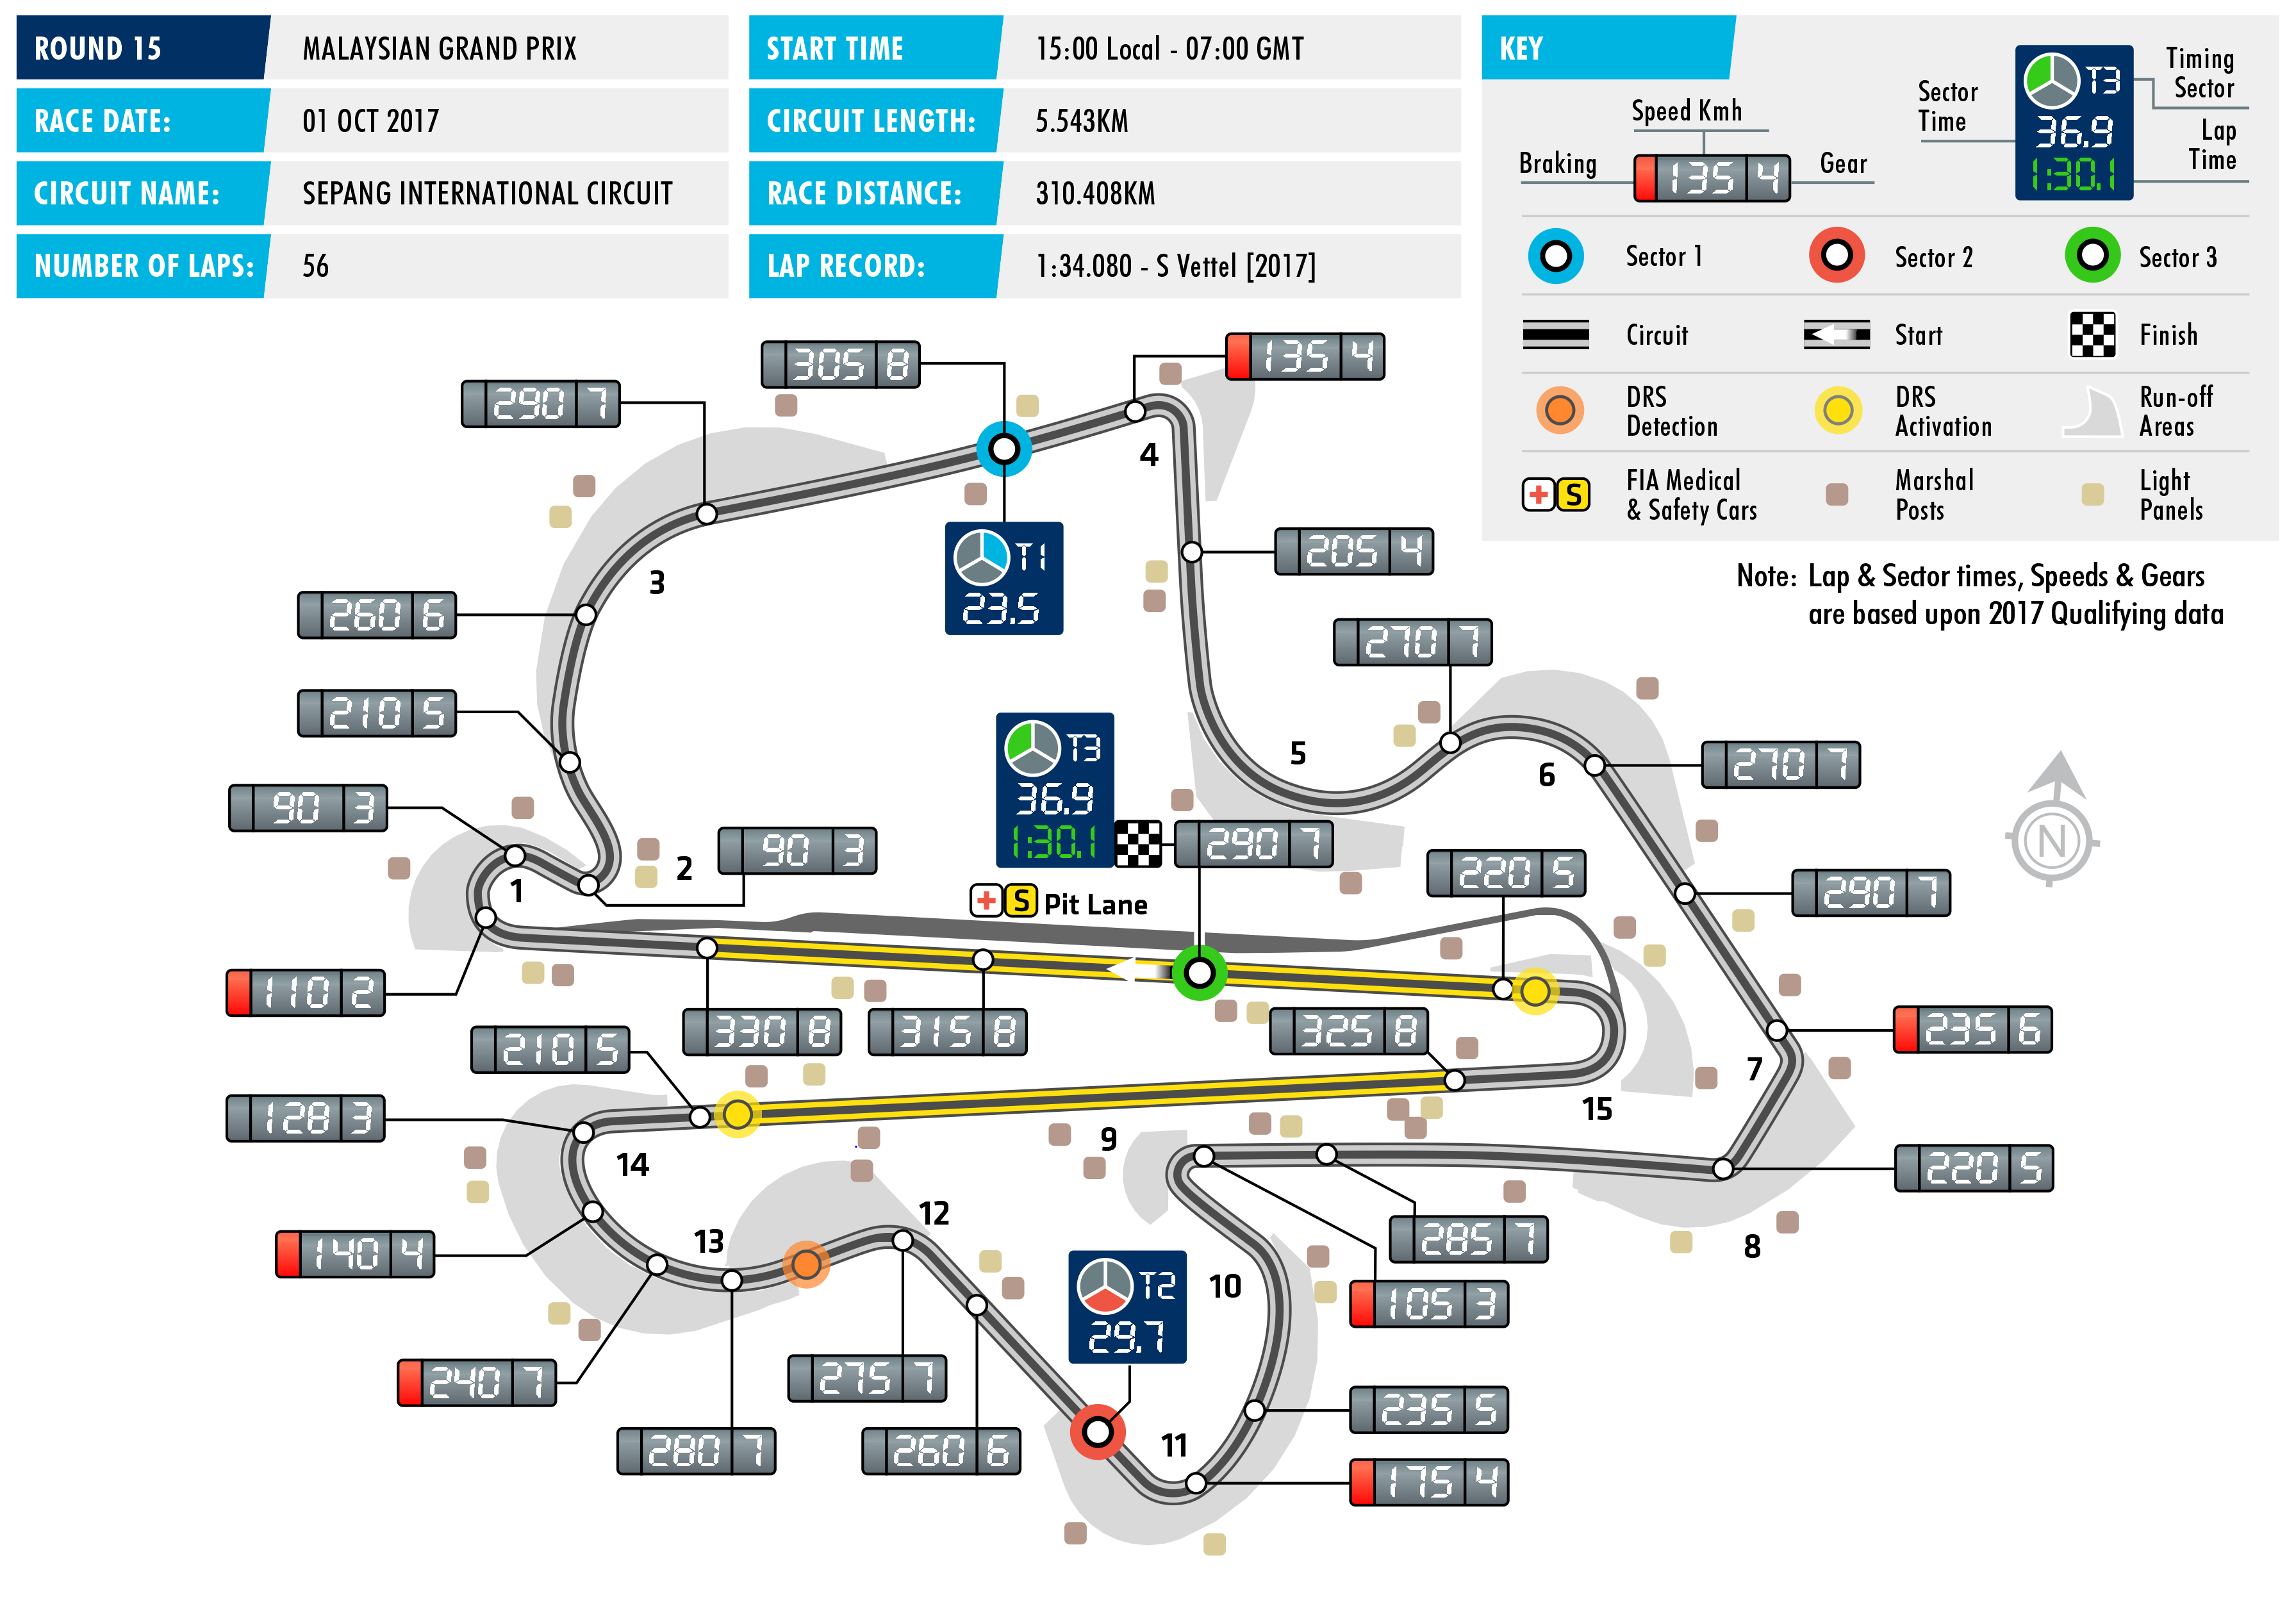 2017 Malaysian Grand Prix - Circuit Map